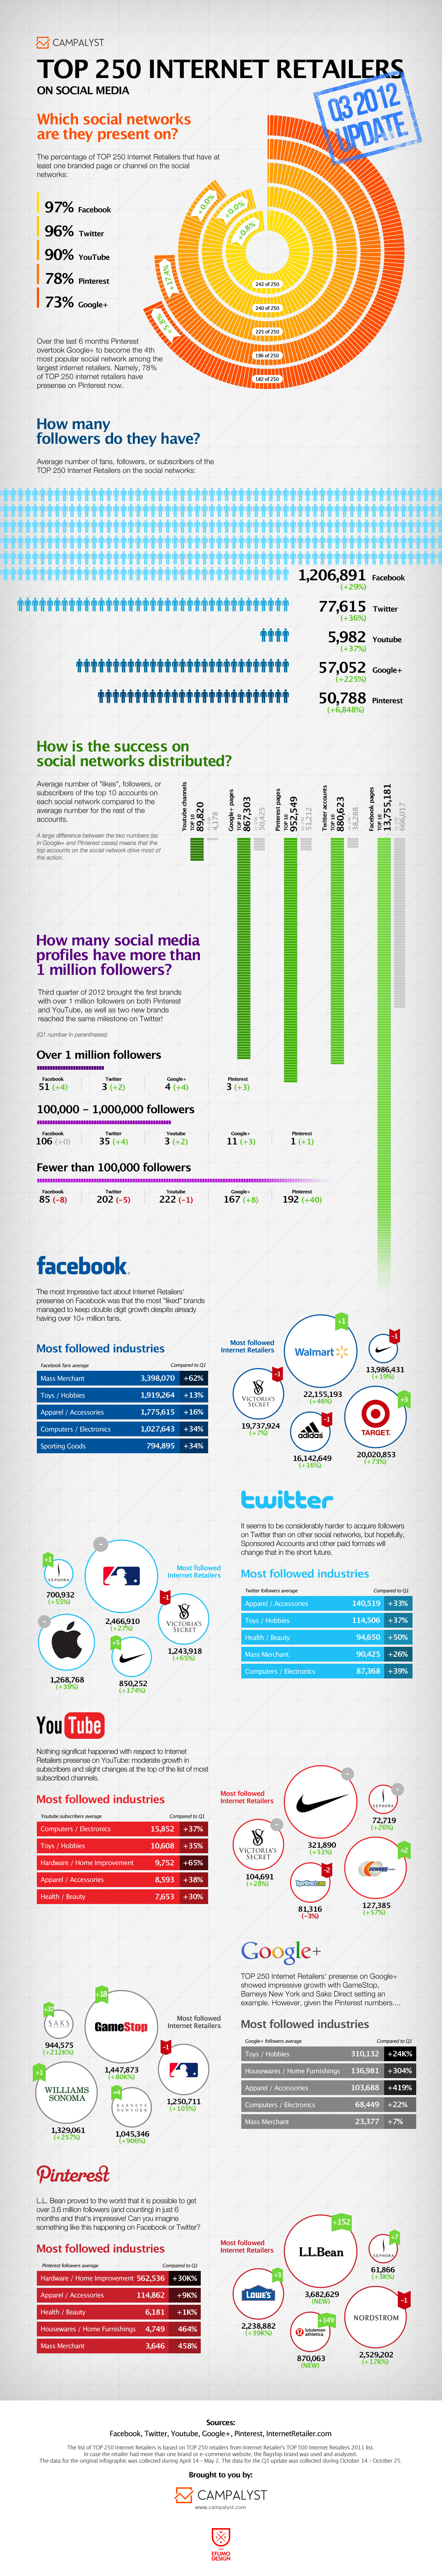 Top 250 Internet Retailers Q3 2012 Update infographic